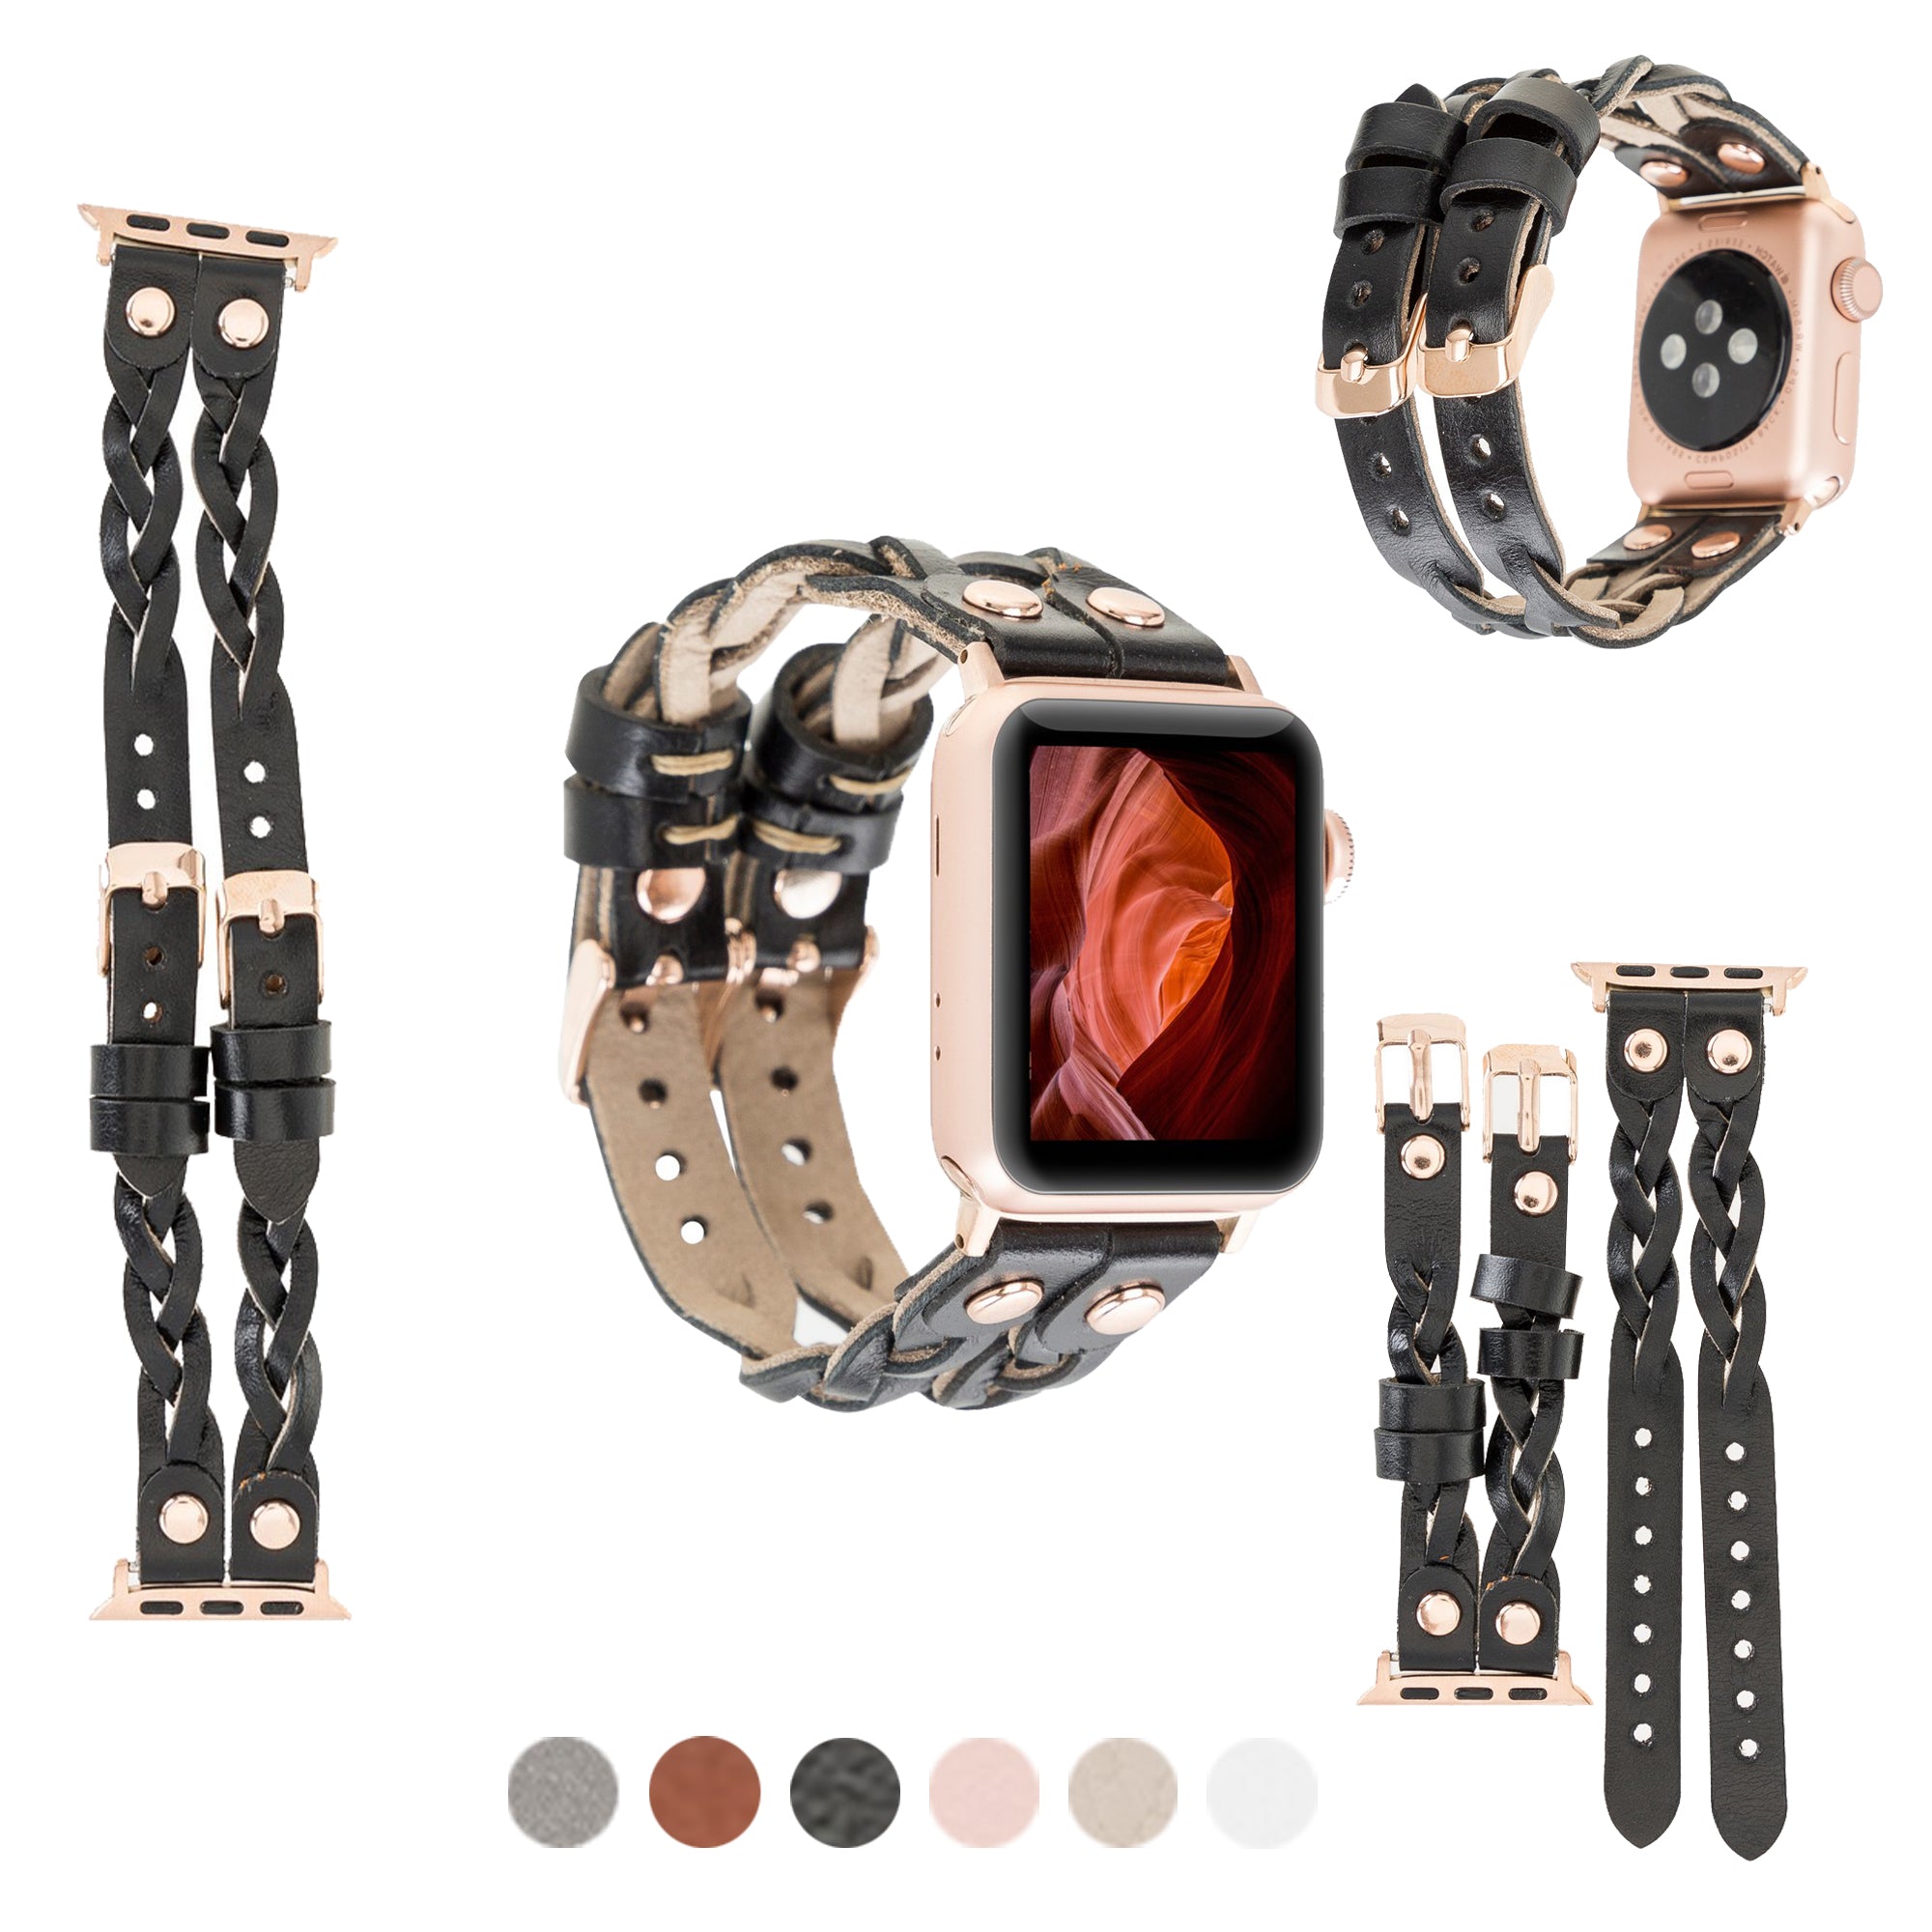 DelfiCase Sheffield-York Double Apple Watch Band for Apple Watch & Fitbit/Sense 51